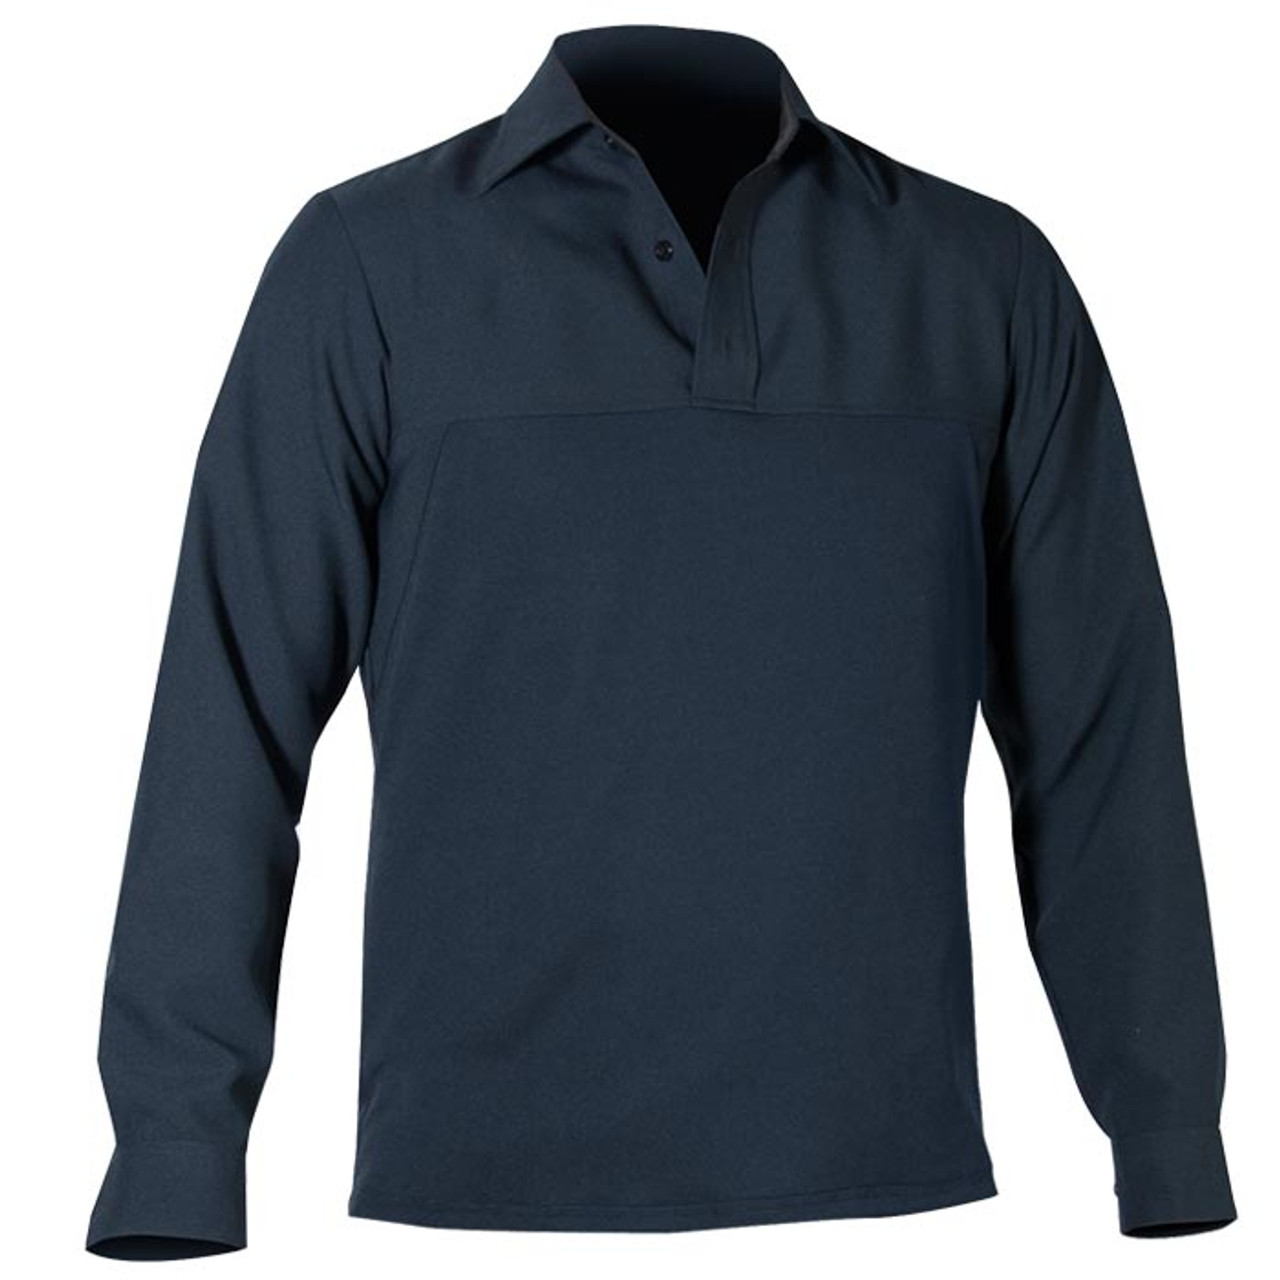 BASE Howard - ARMORSKIN BLAUER WOOL LS NAVY WINTER SHIRT Company Uniform DK BLEND